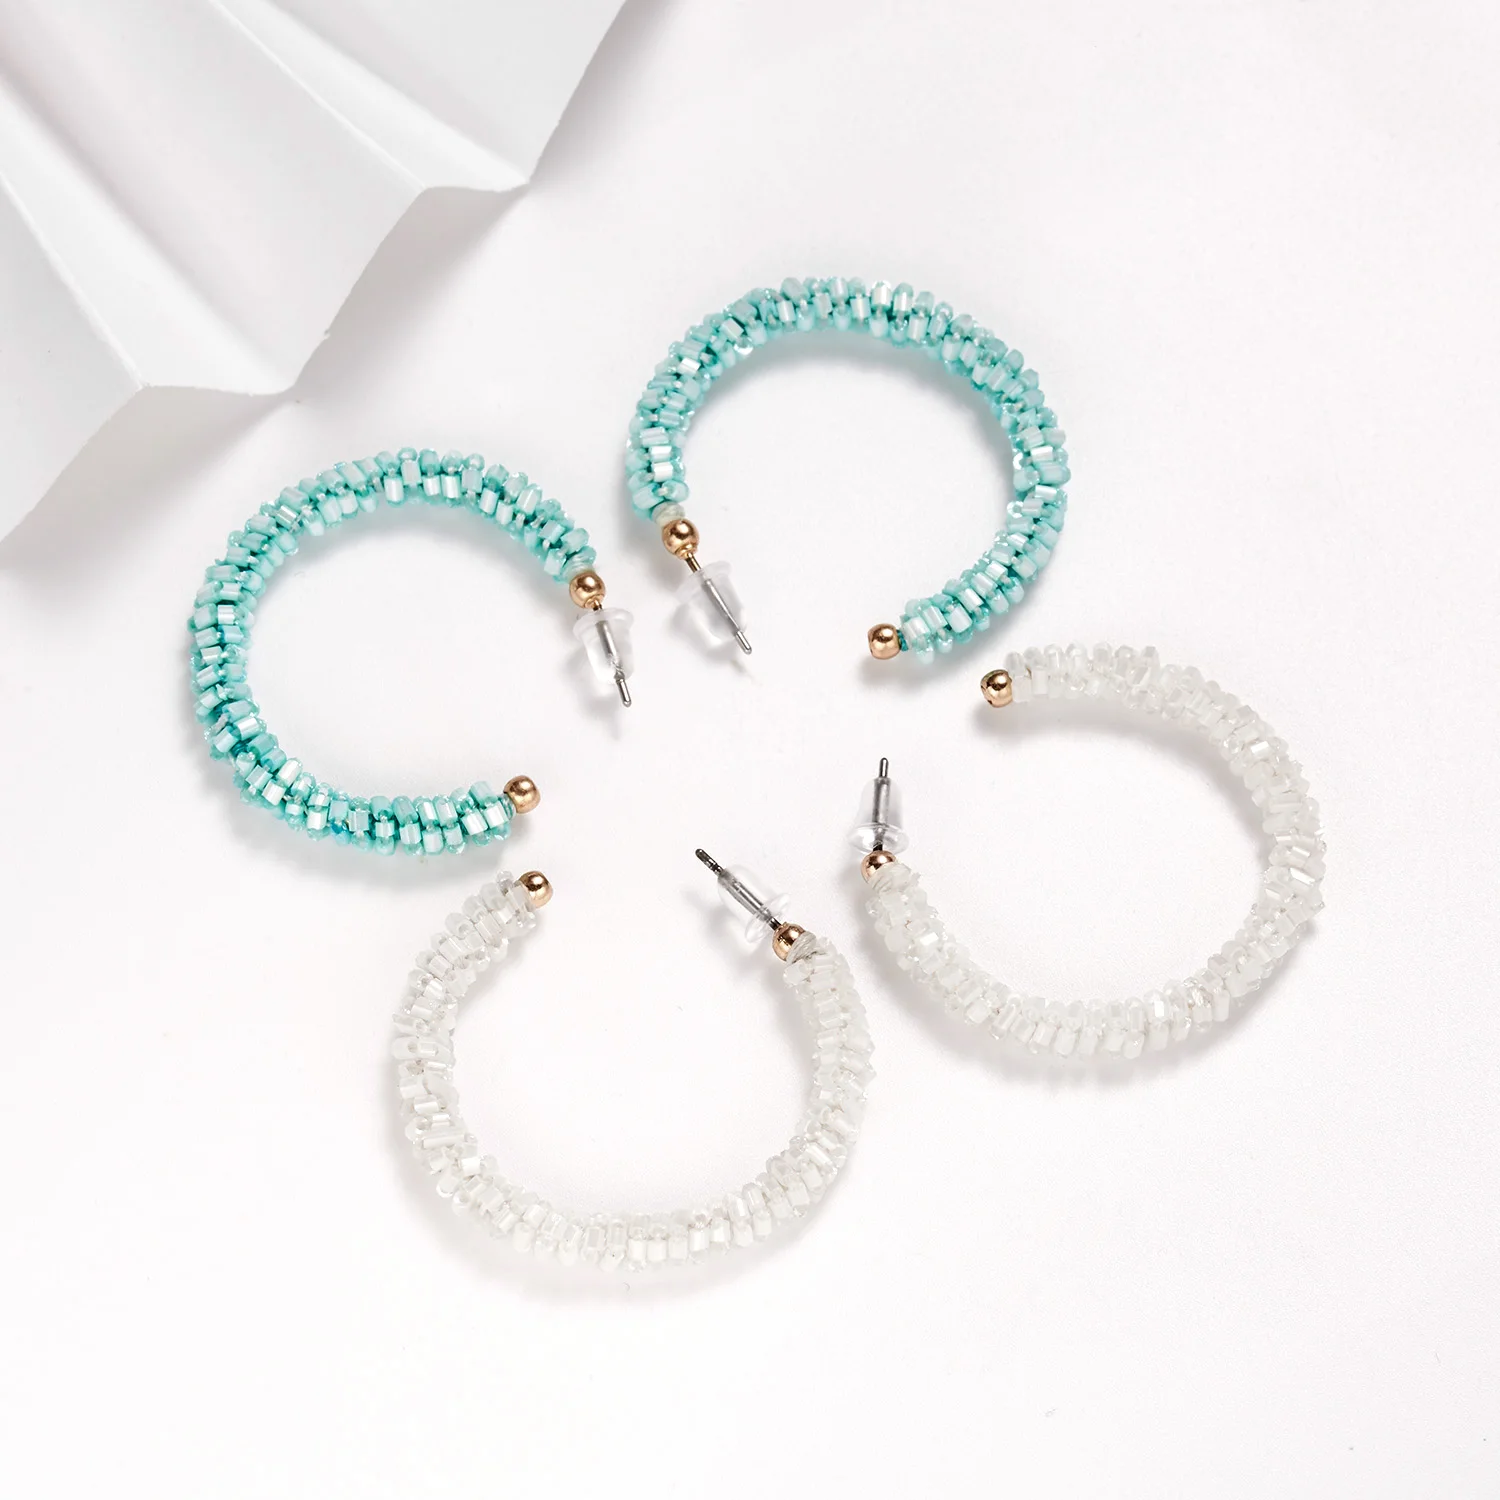 

Bohemia Handmade beaded C-shaped white blue rice bead hoop earrings for women 2021 fashion jewelry, Picture shows